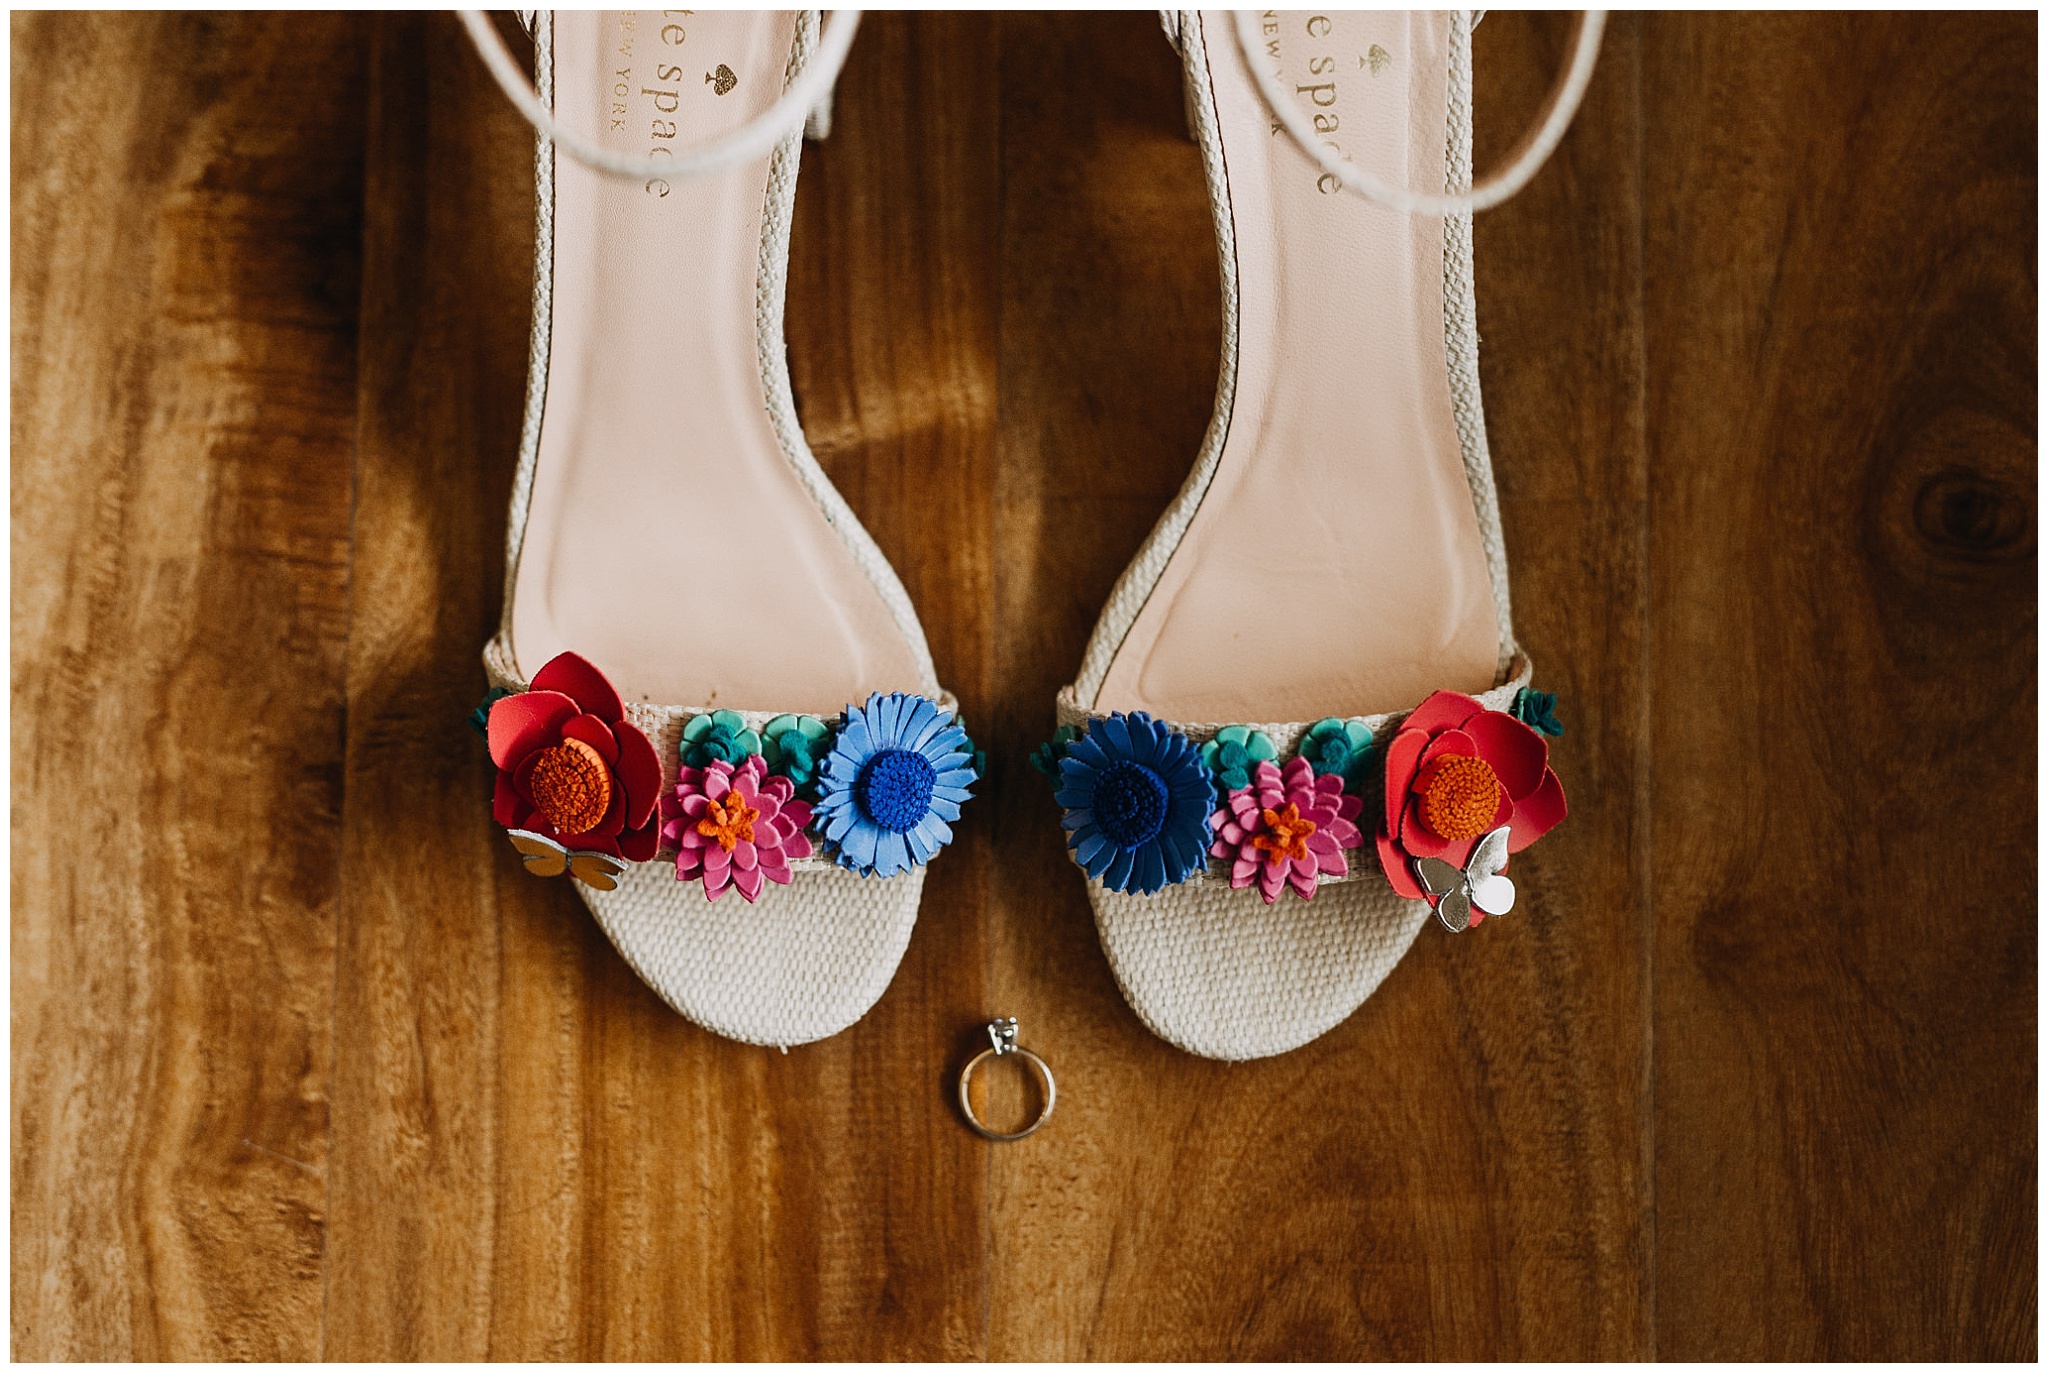 kate spade wedding shoes for bride